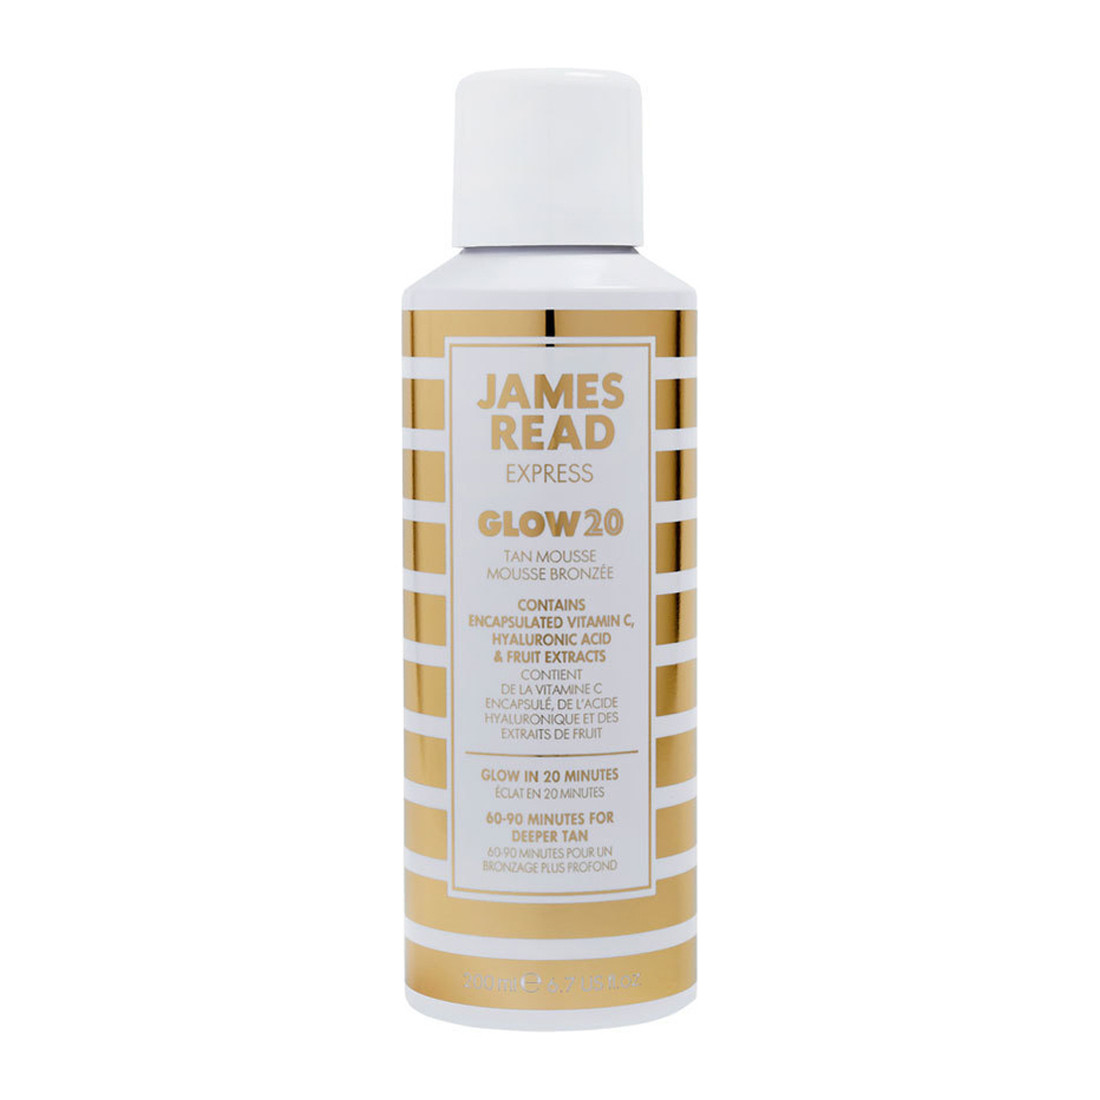 James Read Glow 20 Express Tan Mousse Експрес-мус автозасмага для тіла